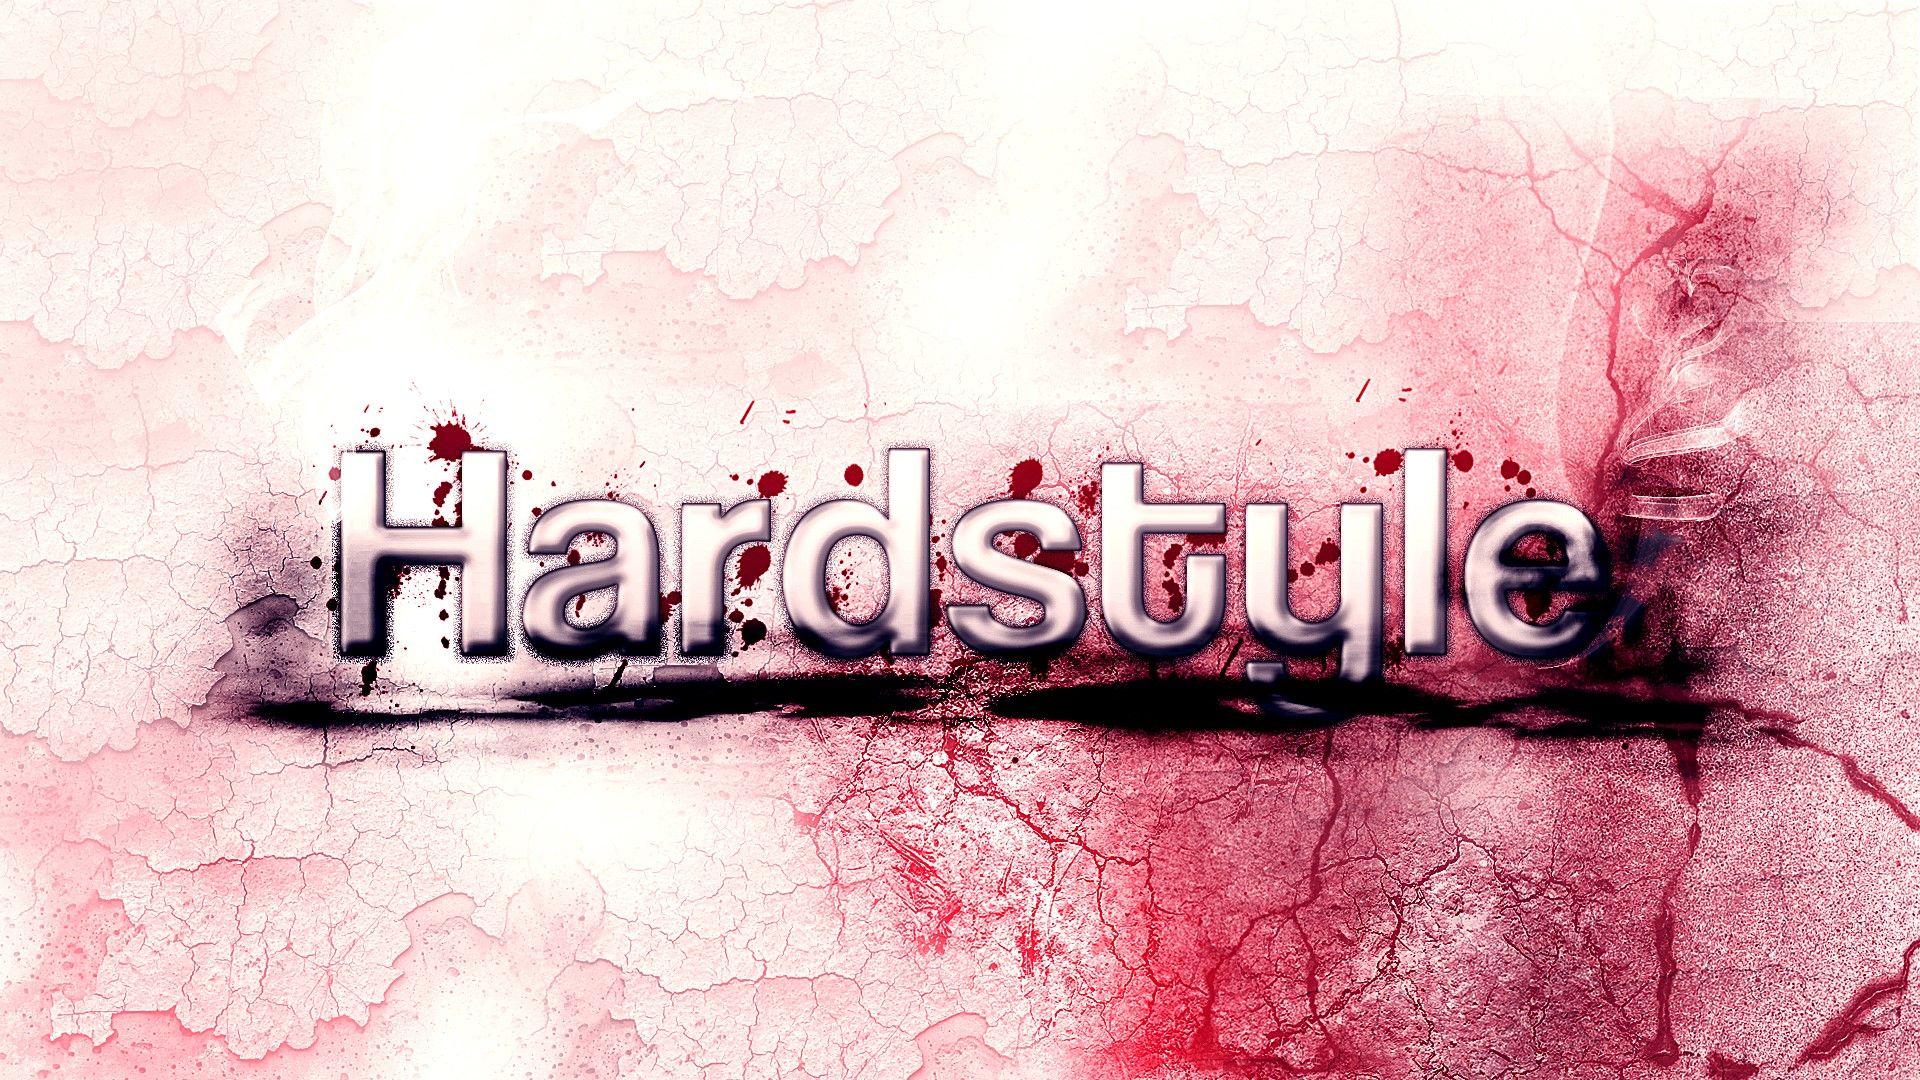 Hardstyle image hardstyle image HD wallpaper and background